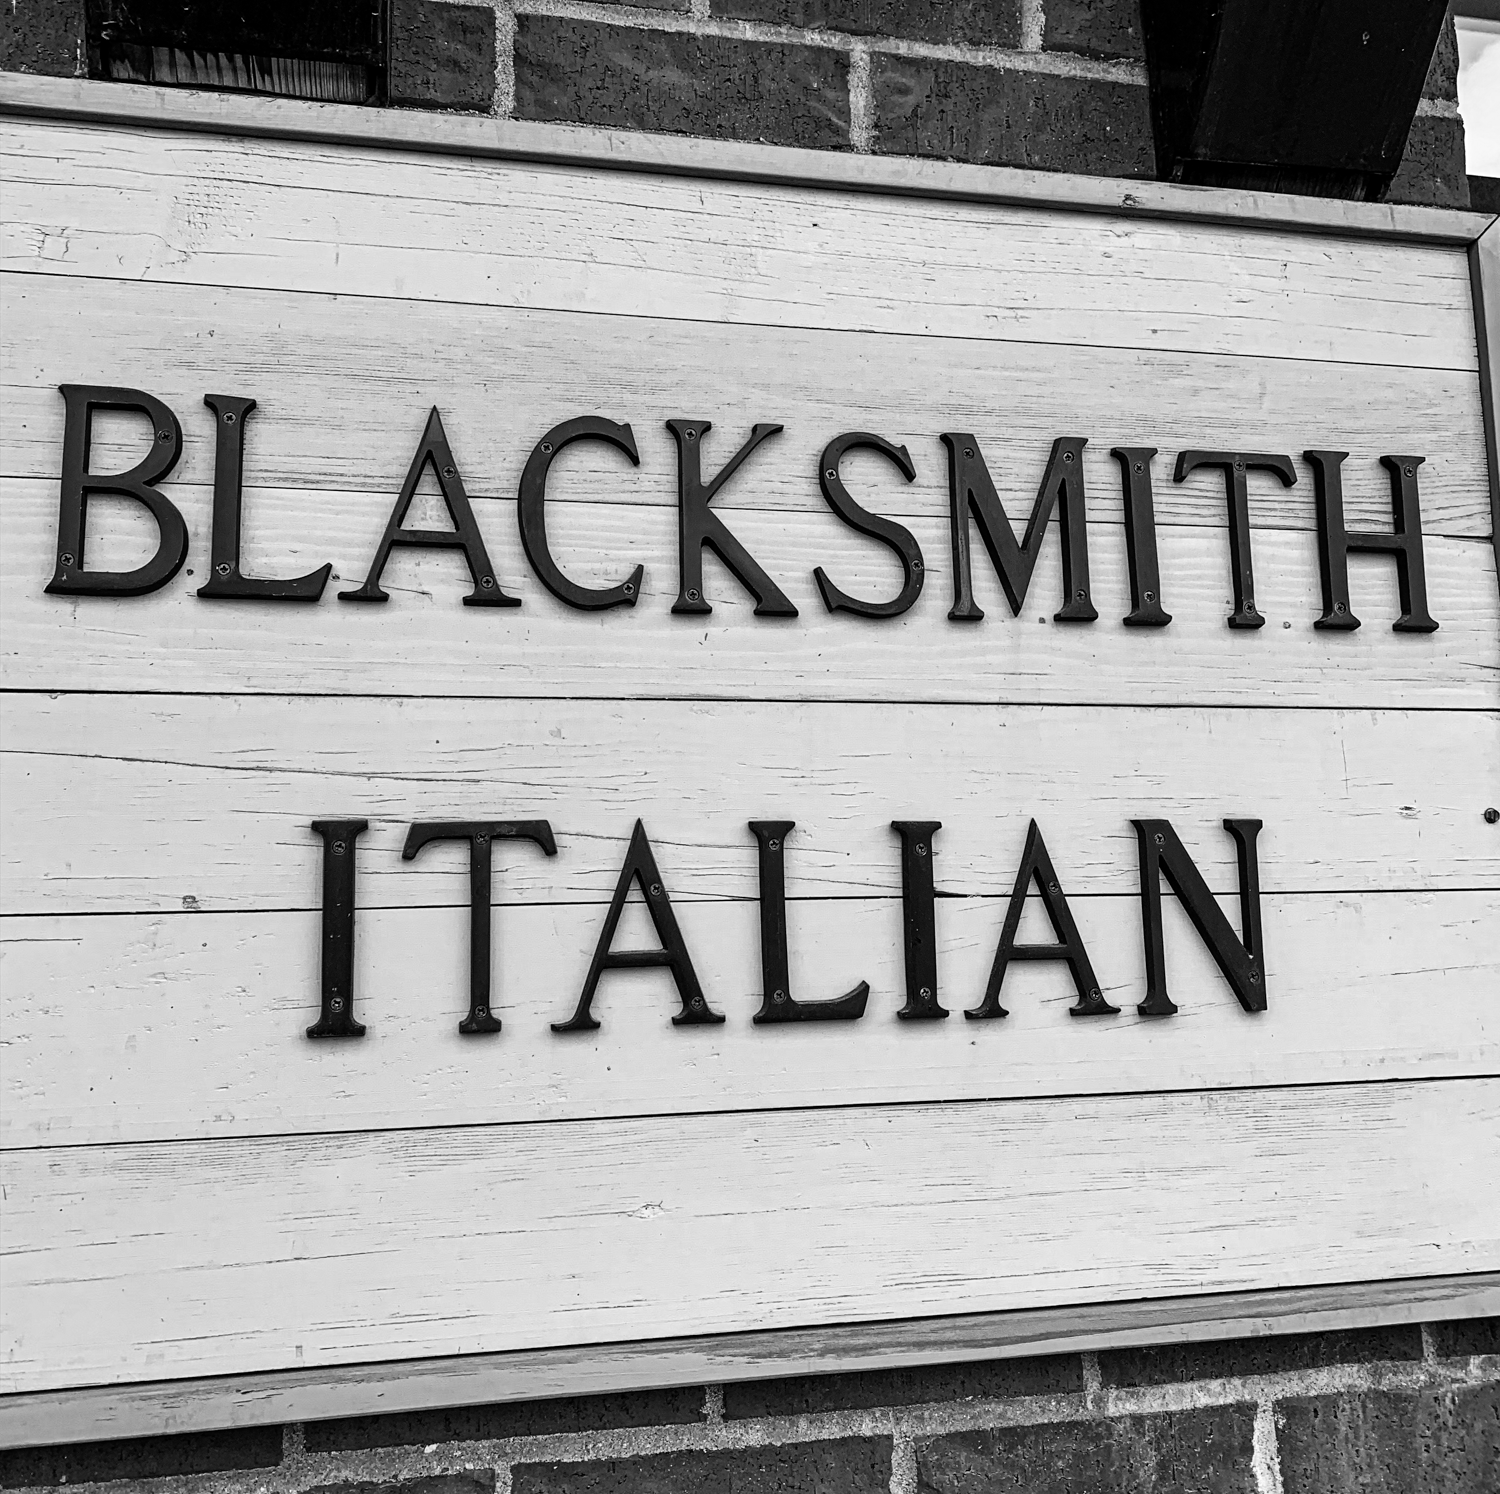 The Butterscotch Budino at Blacksmith Italian – A Culinary Treasure! By Steven Shomler